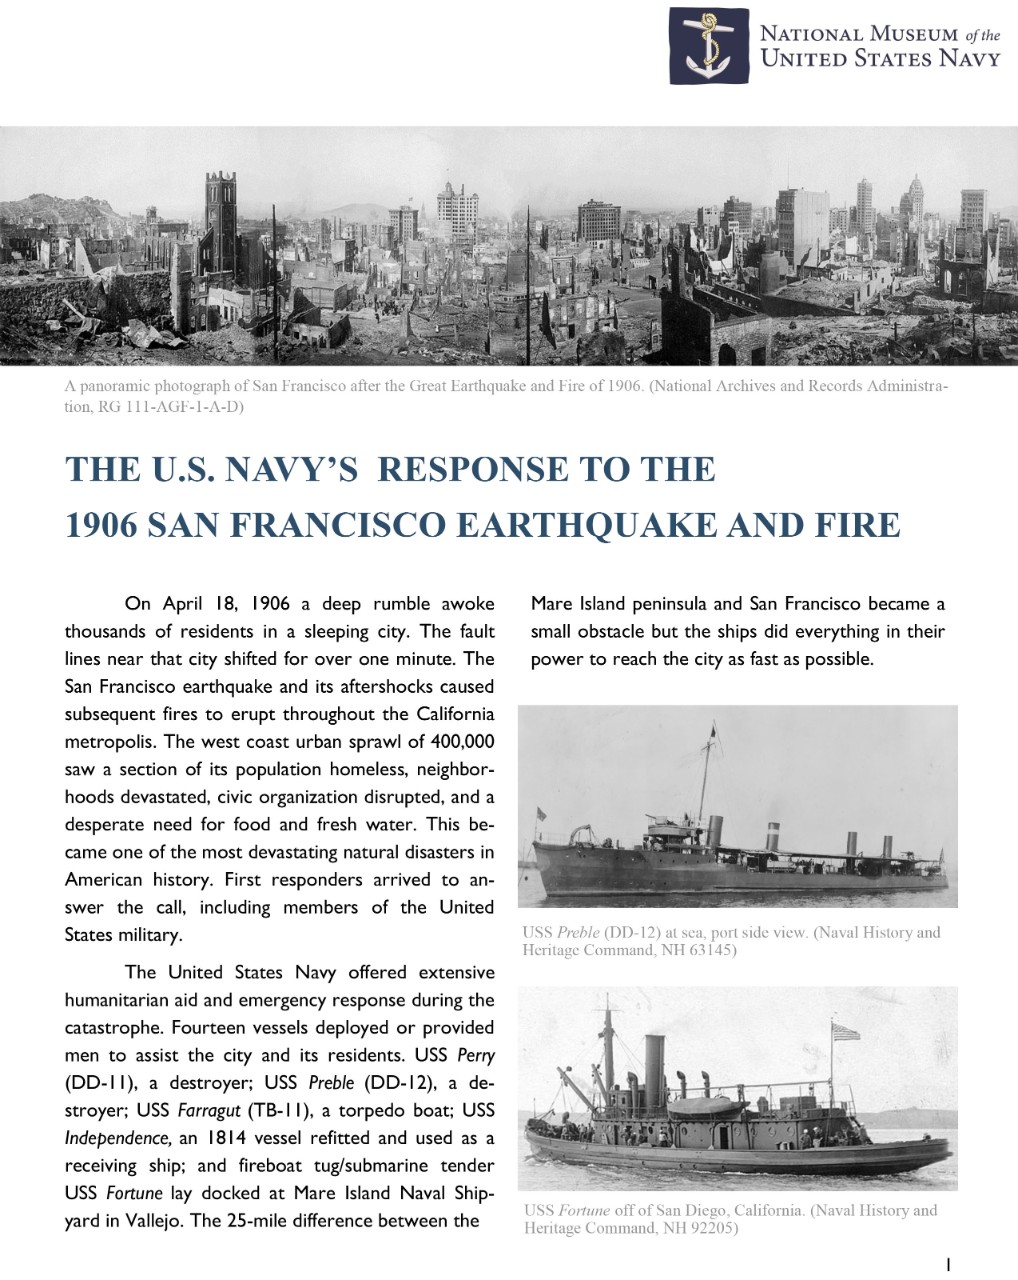 NMUSN_United States Navy_Response to the 1906 San Francisco Earthquake